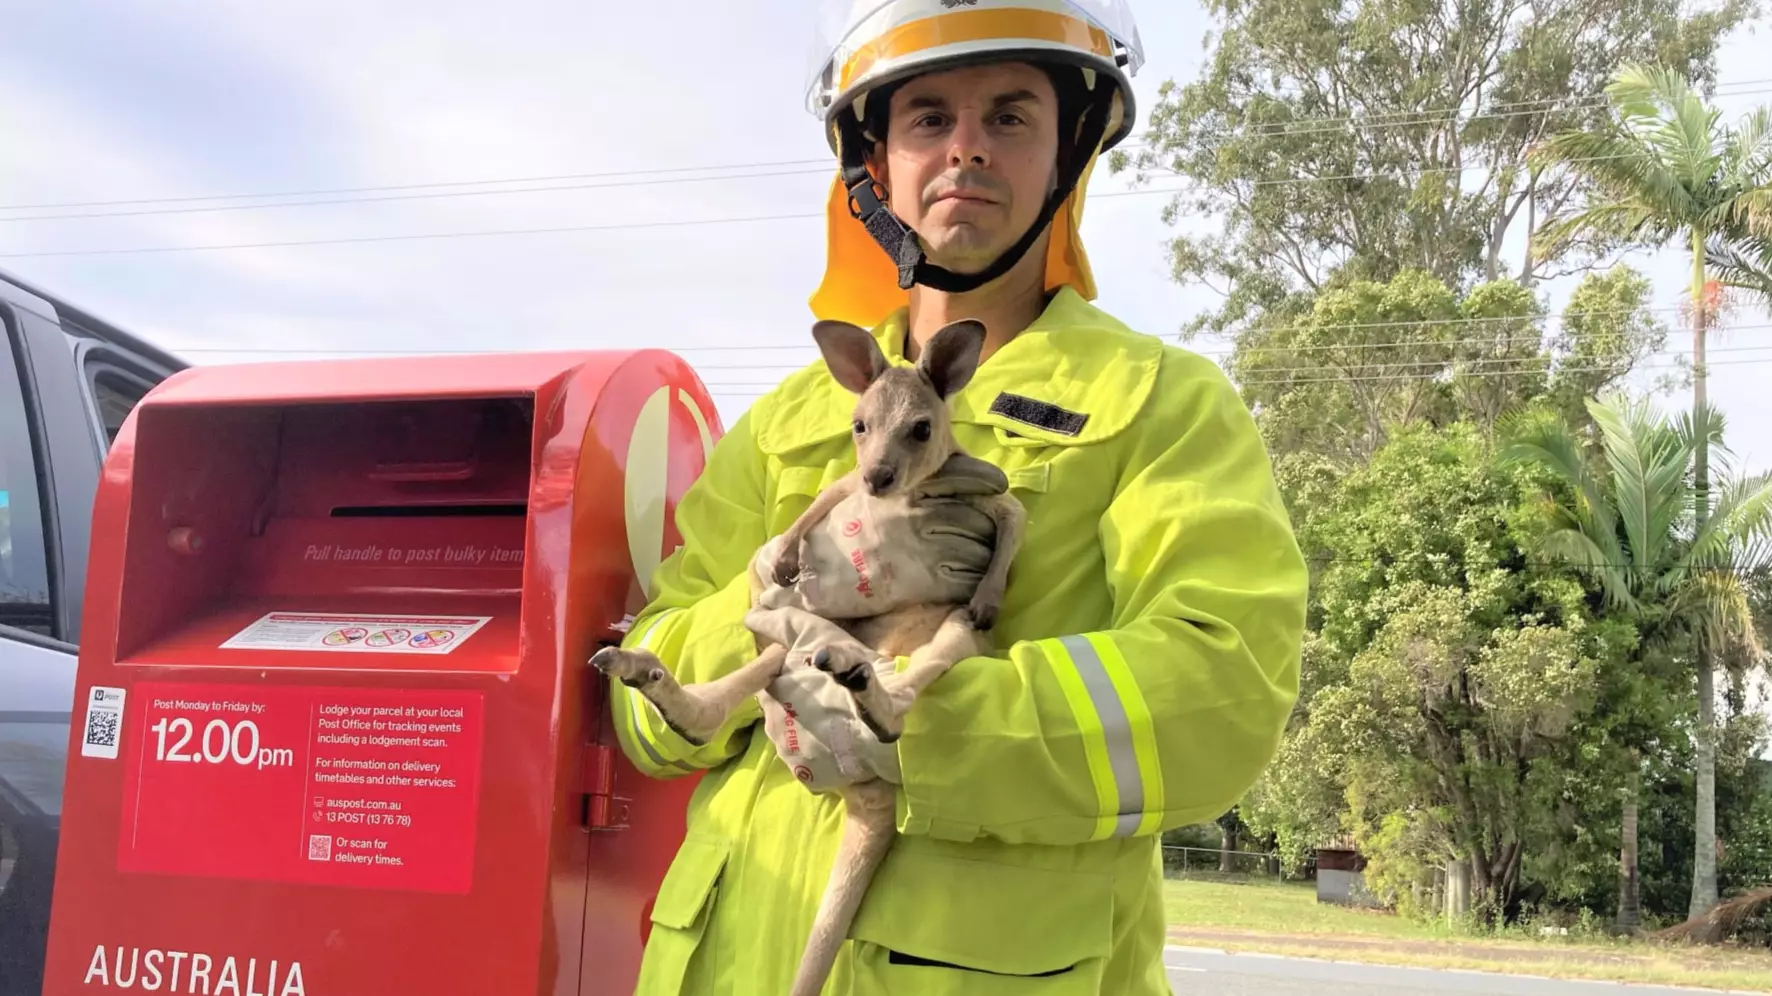 Shock After Kangaroo Joey Found Stuffed Inside Australian Post Box